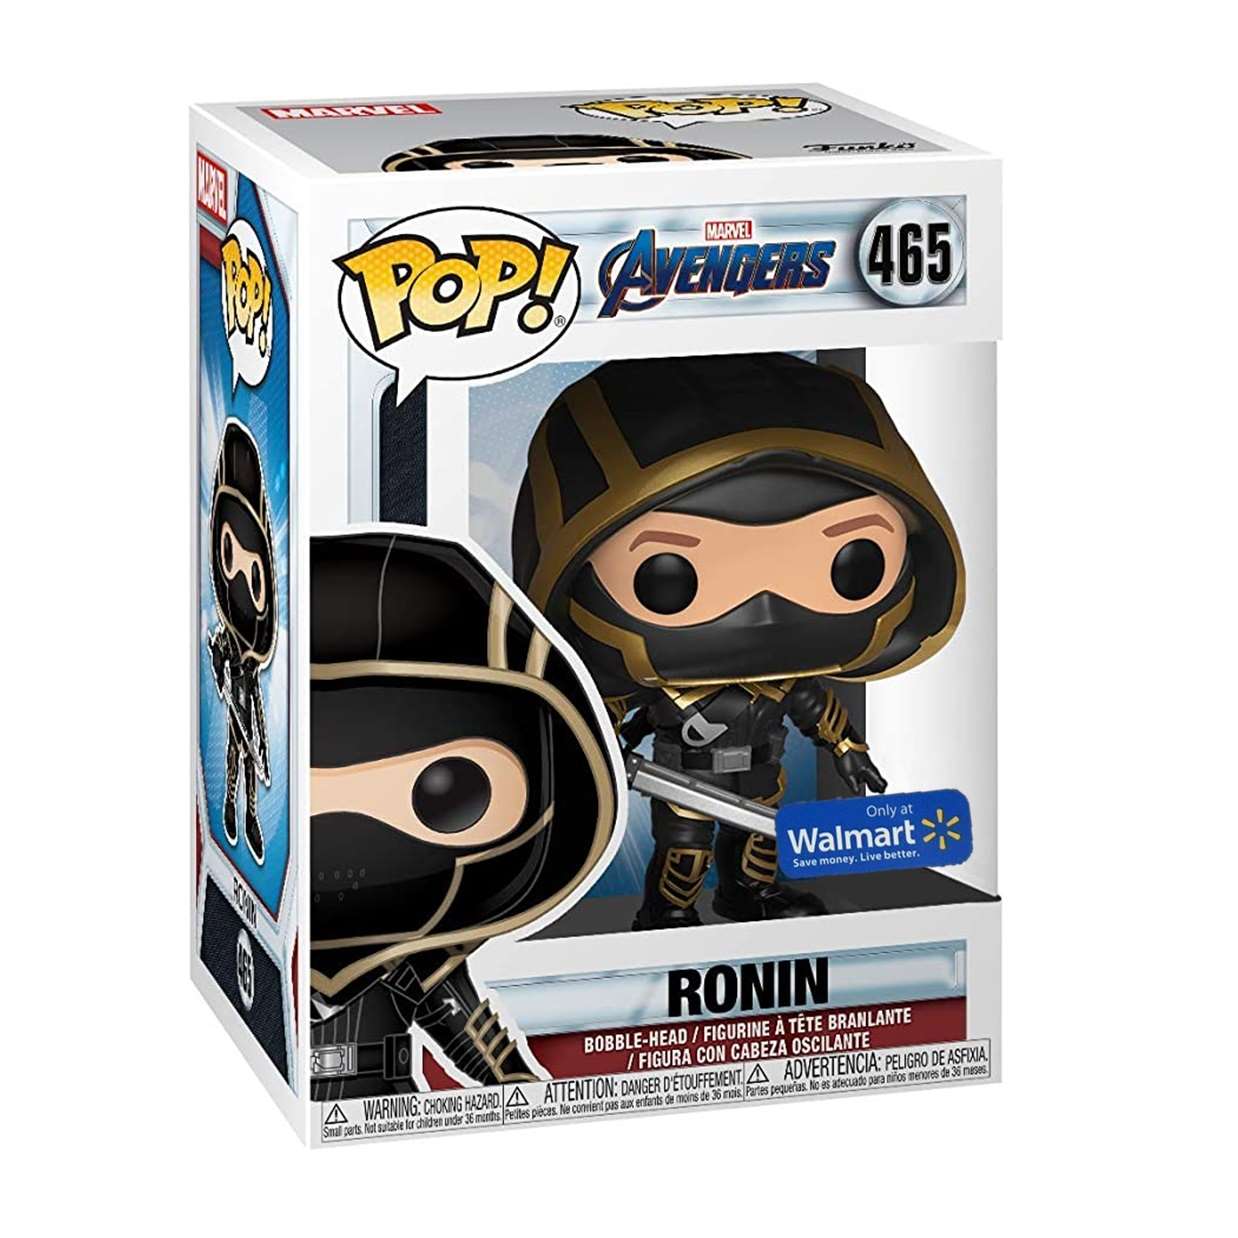 Ronin #465 Figura End Game Funko Pop! Exclusivo Walmart